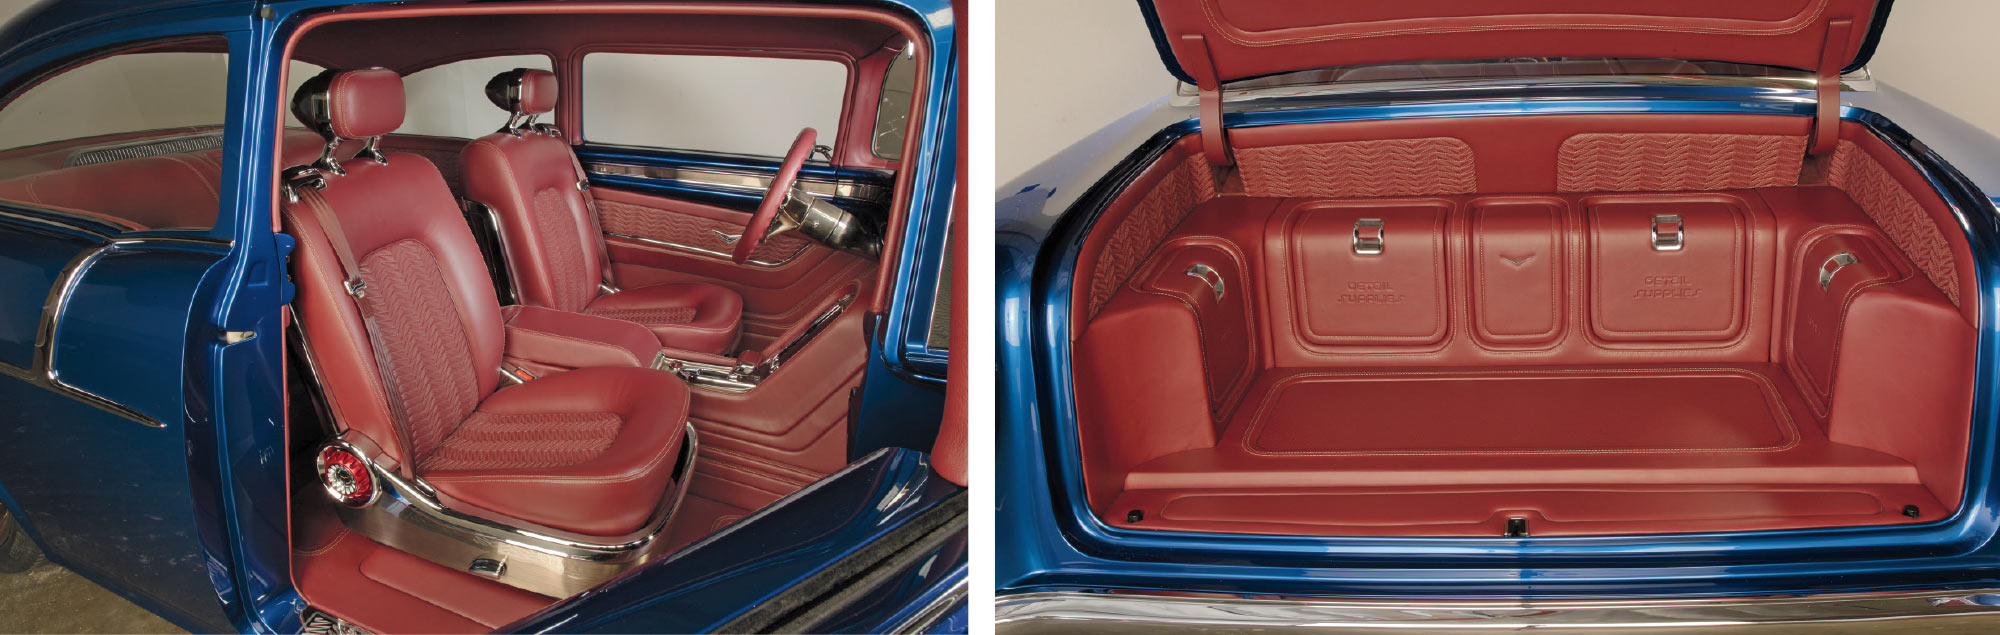 1955 CHEVY interior seats displayed